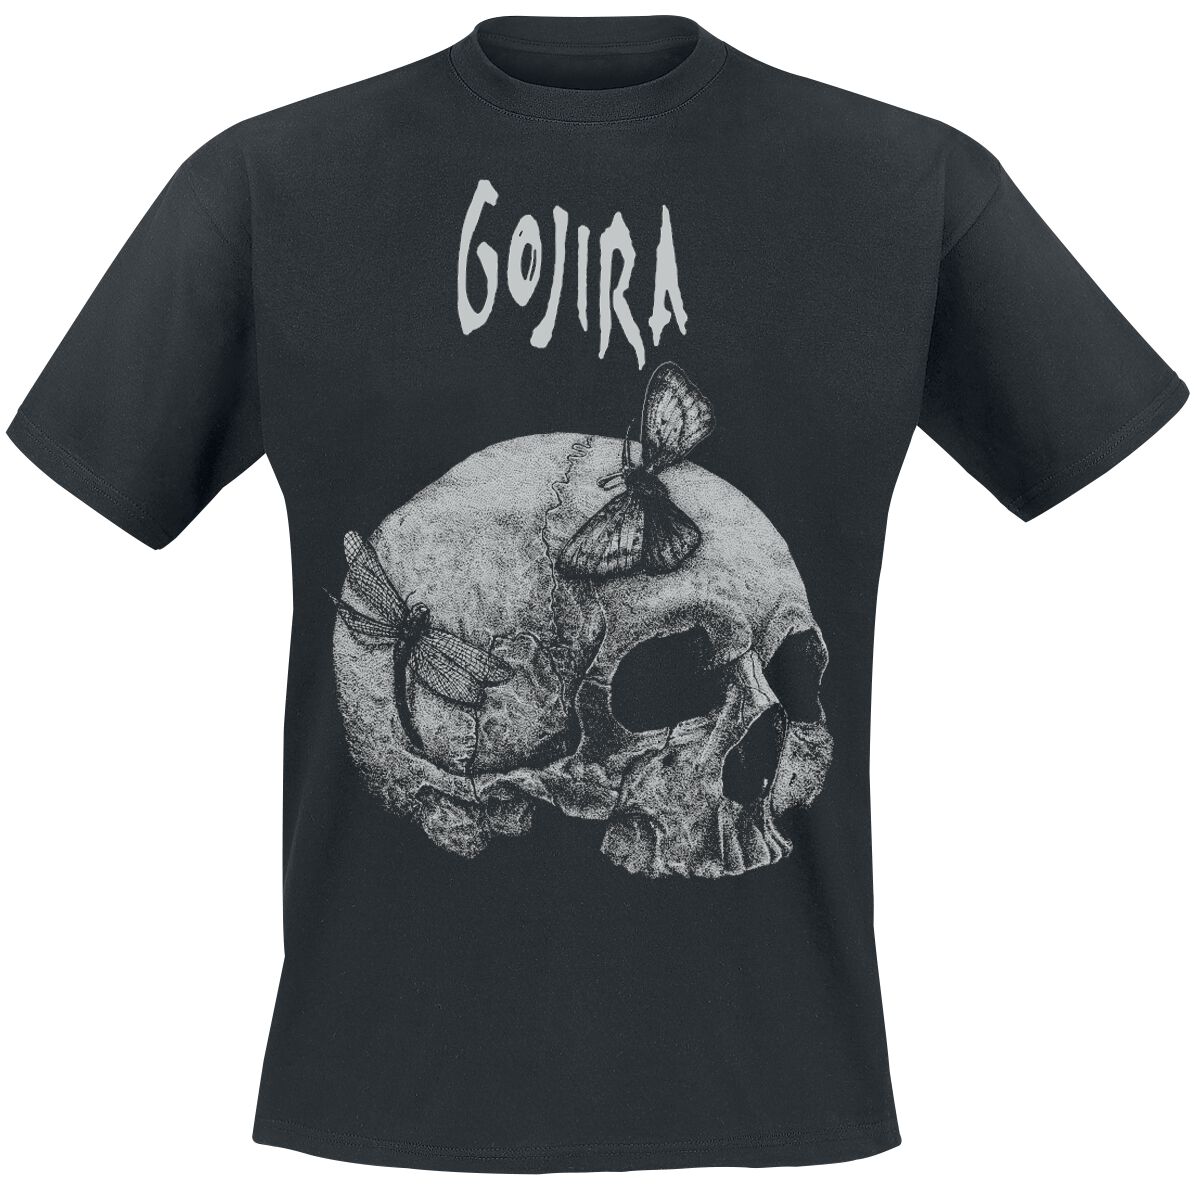 Gojira Moth Skull T-Shirt schwarz in XL